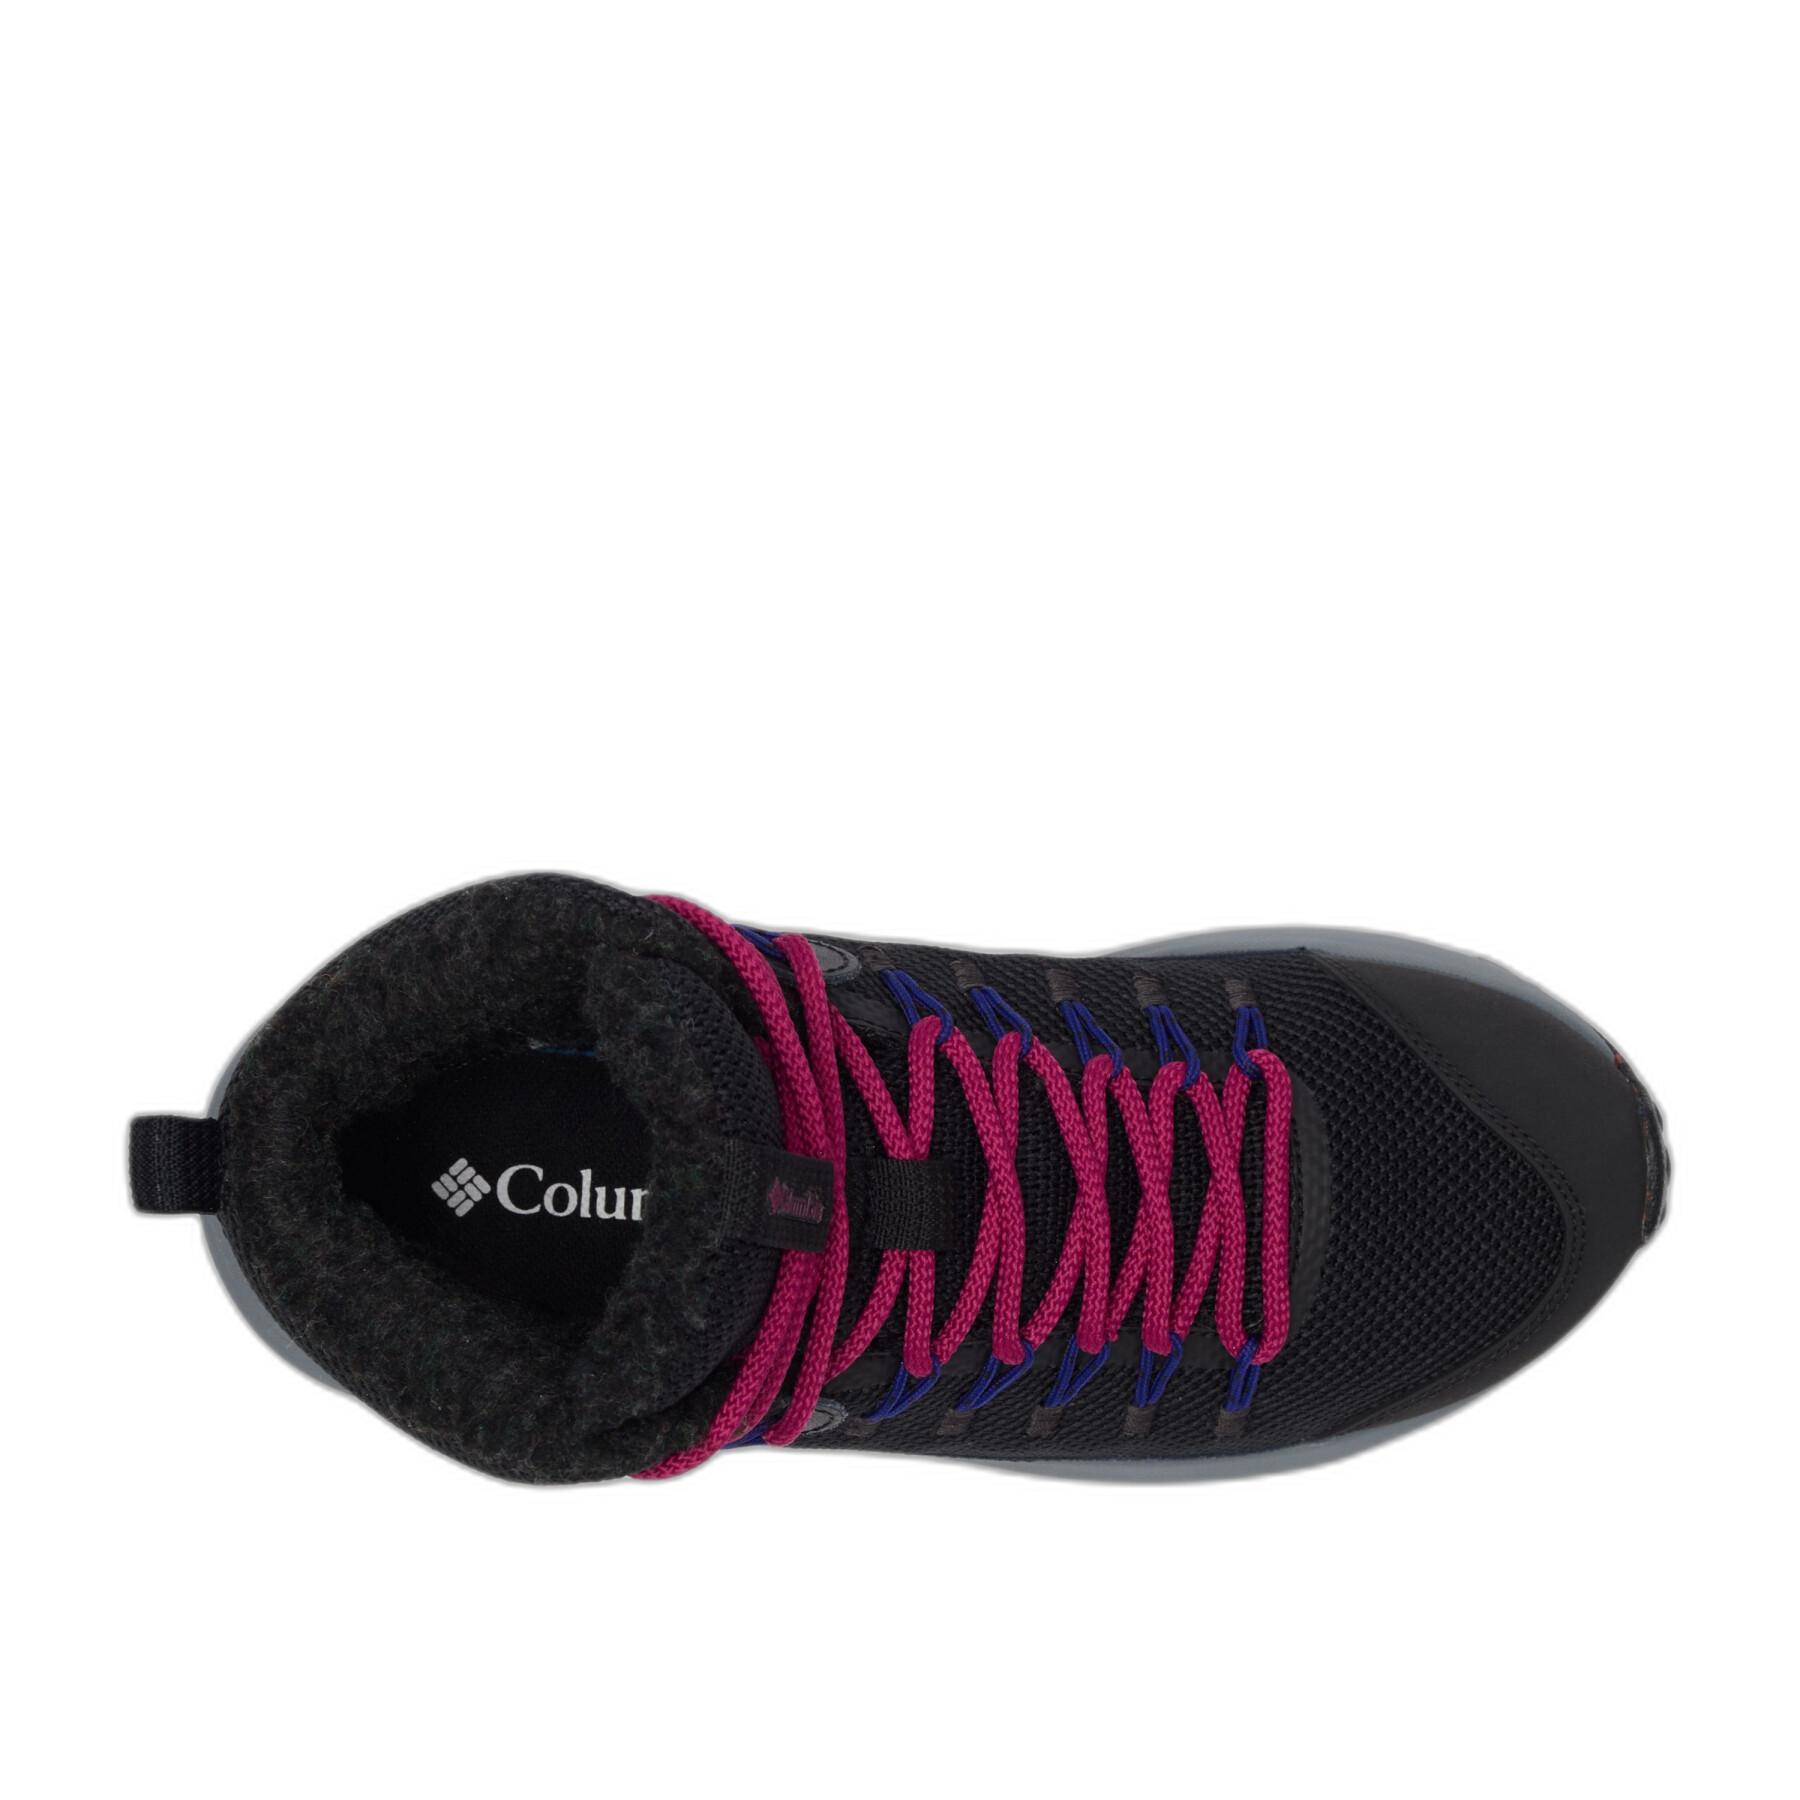 Women's waterproof hiking boots Columbia Trailstorm™ Mid Omni Heat™